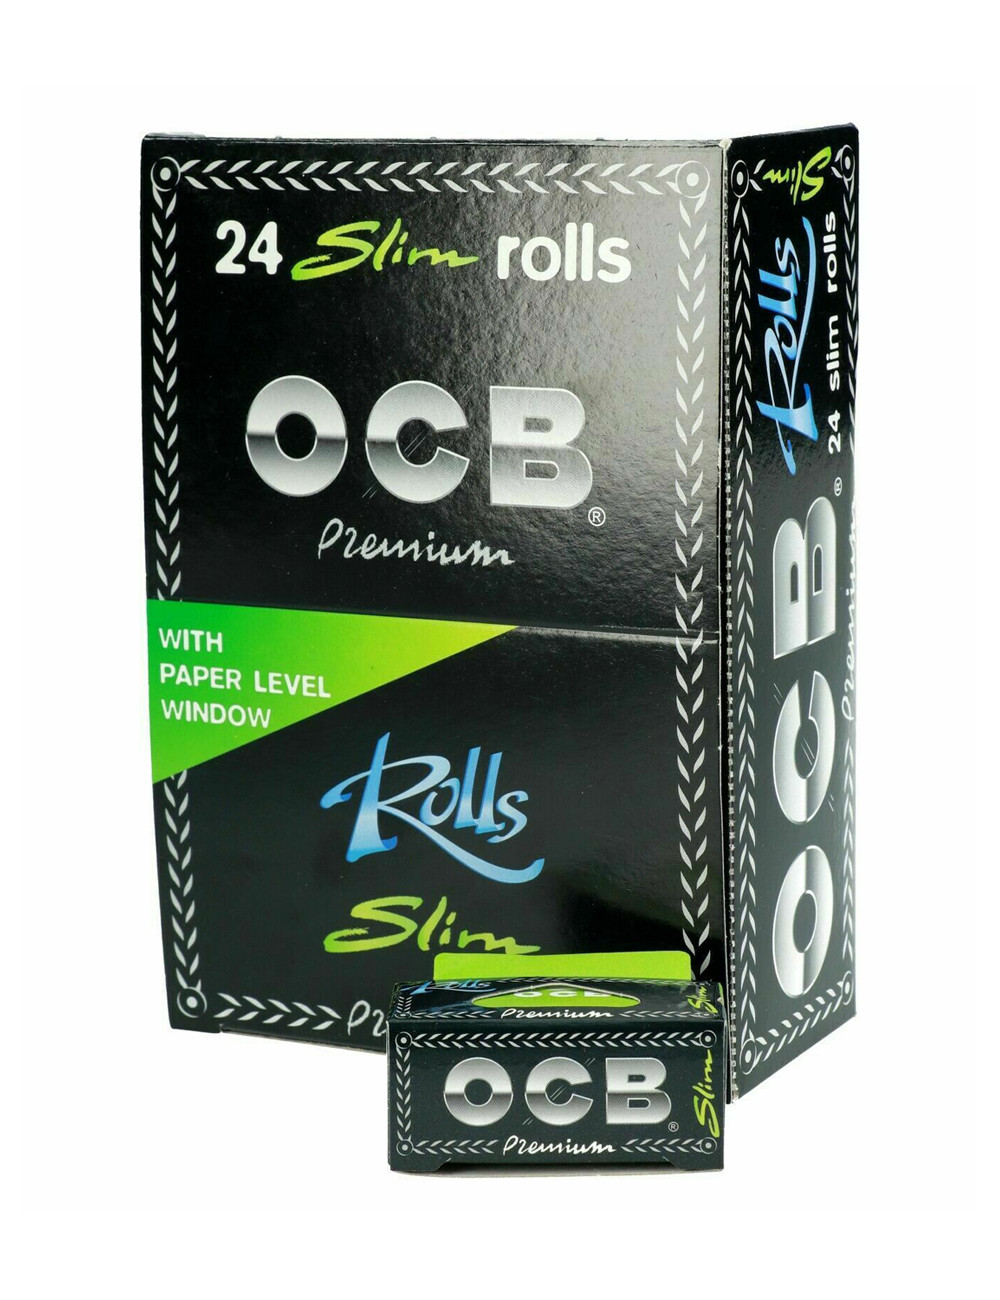 Black rolls slim